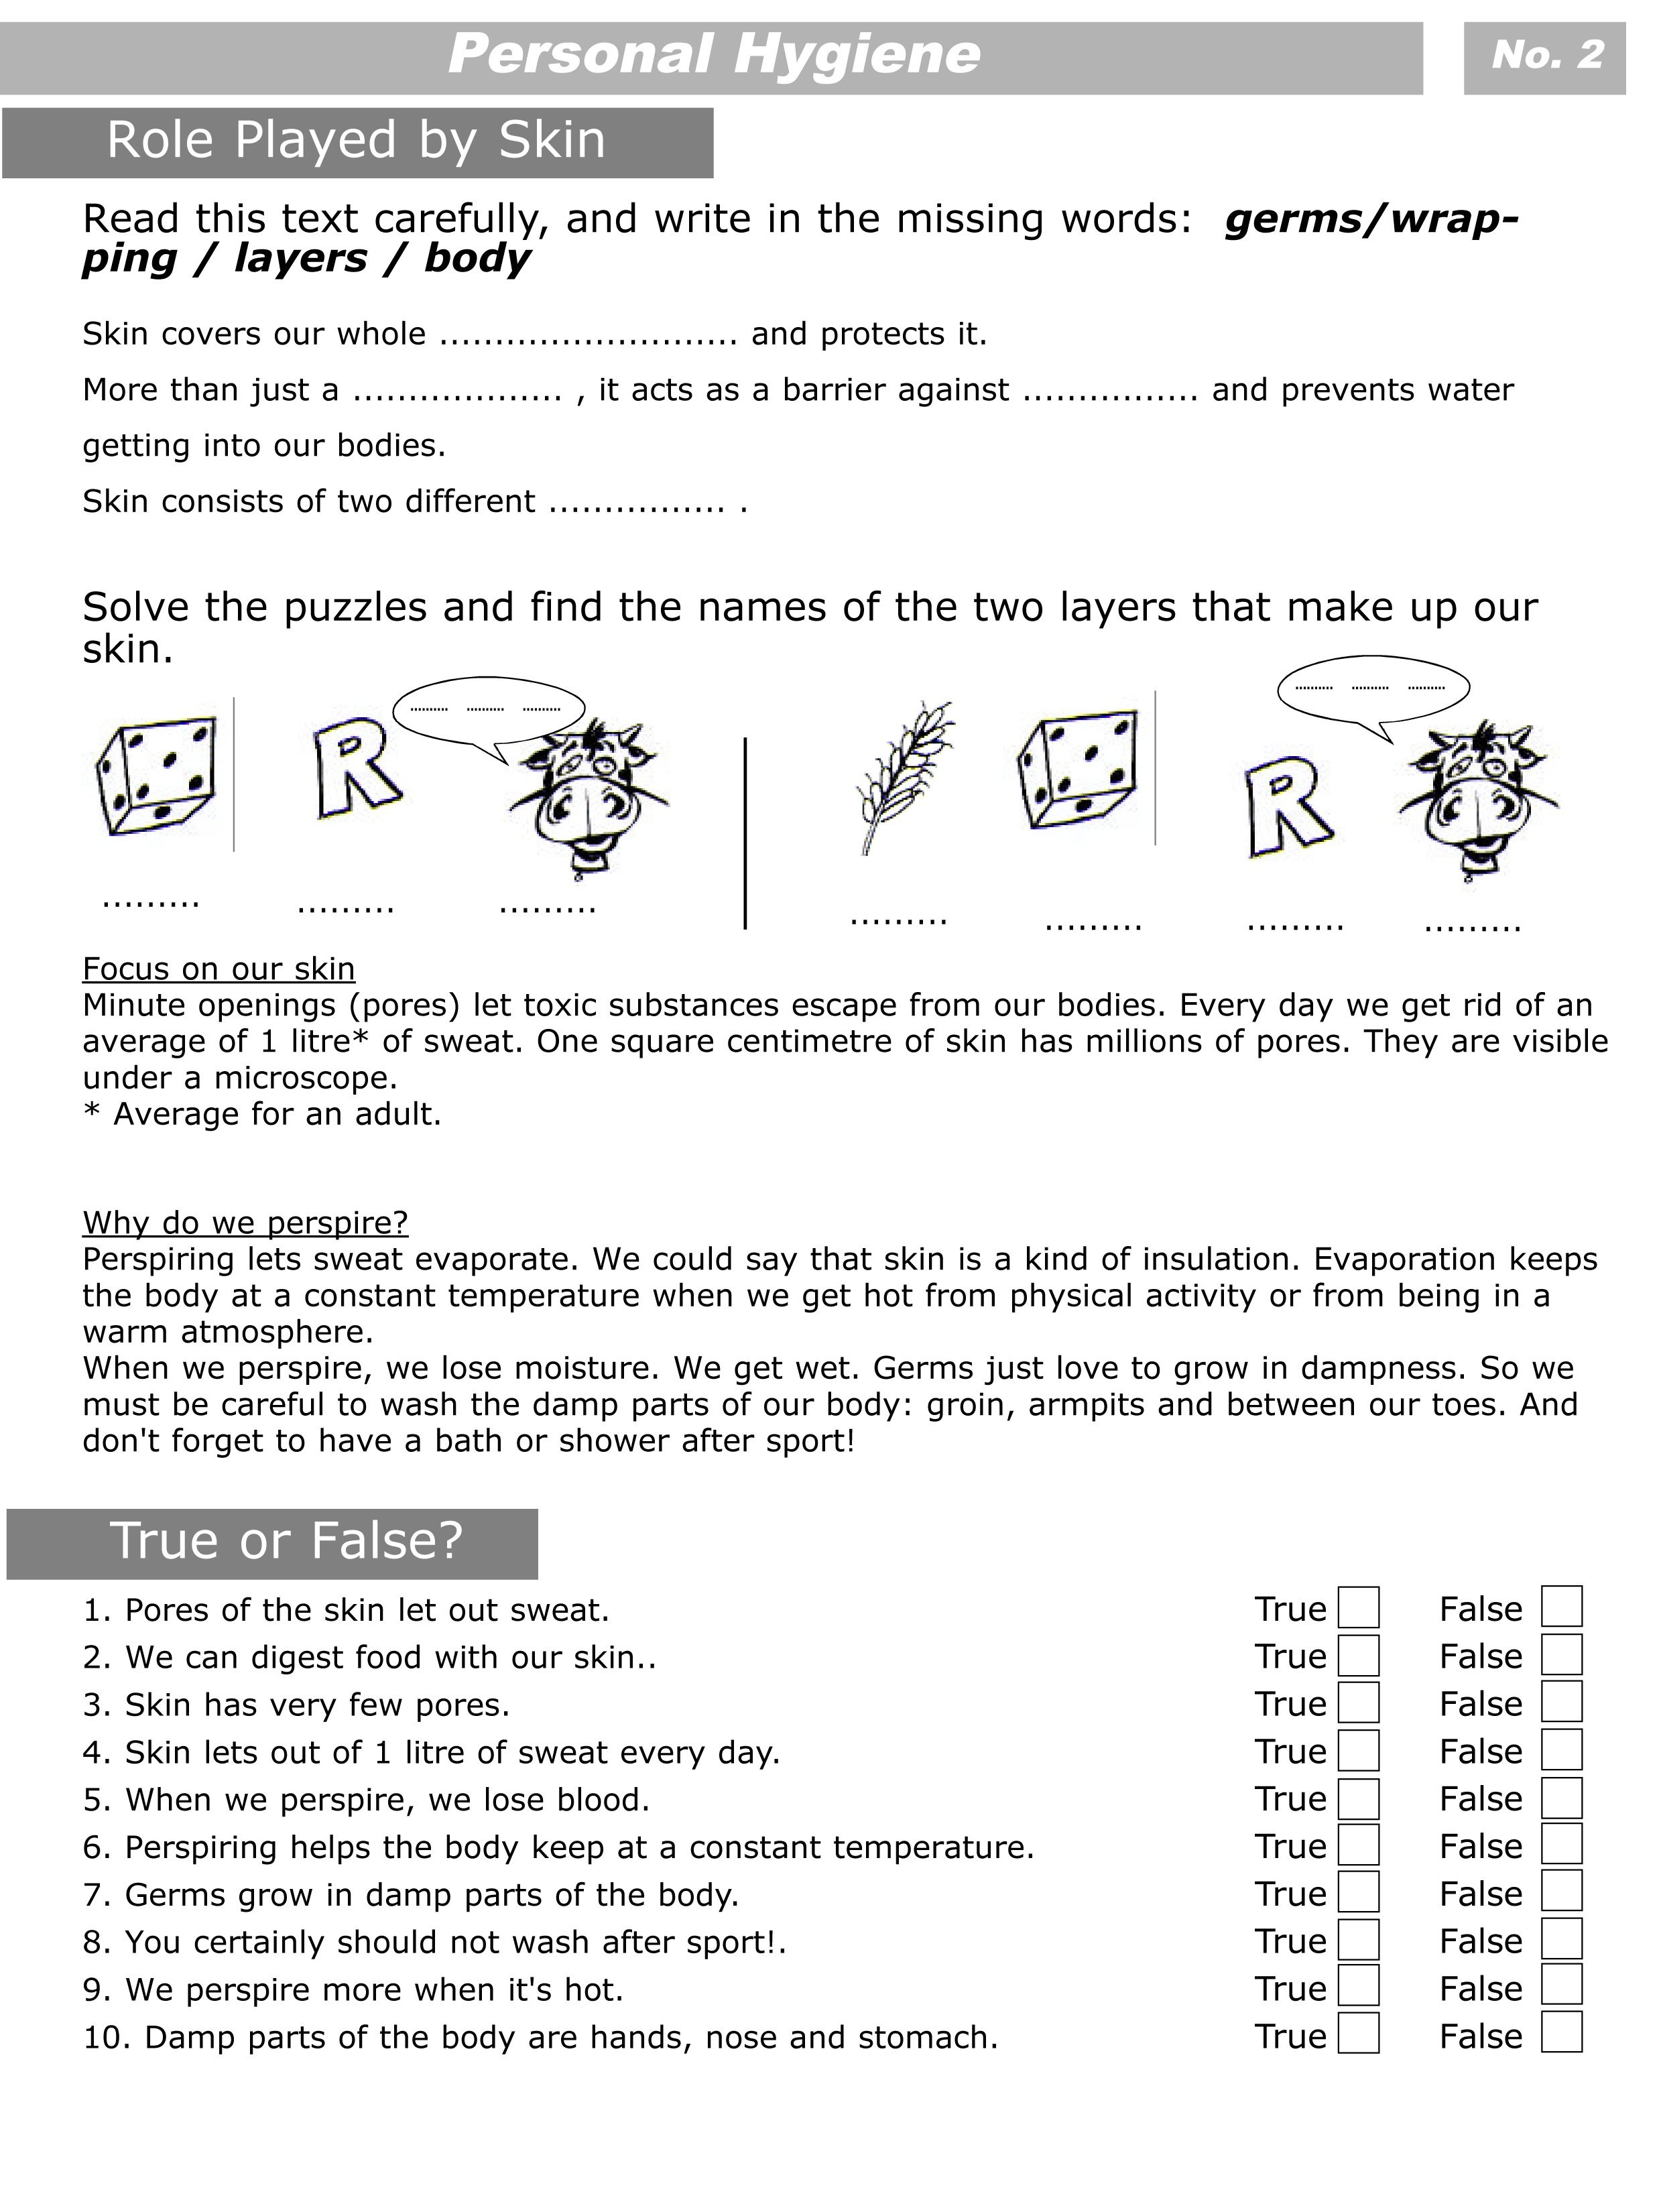 Personal Hygiene Worksheets For Kids Level 2 2  Personal Hygiene For Personal Hygiene Worksheets